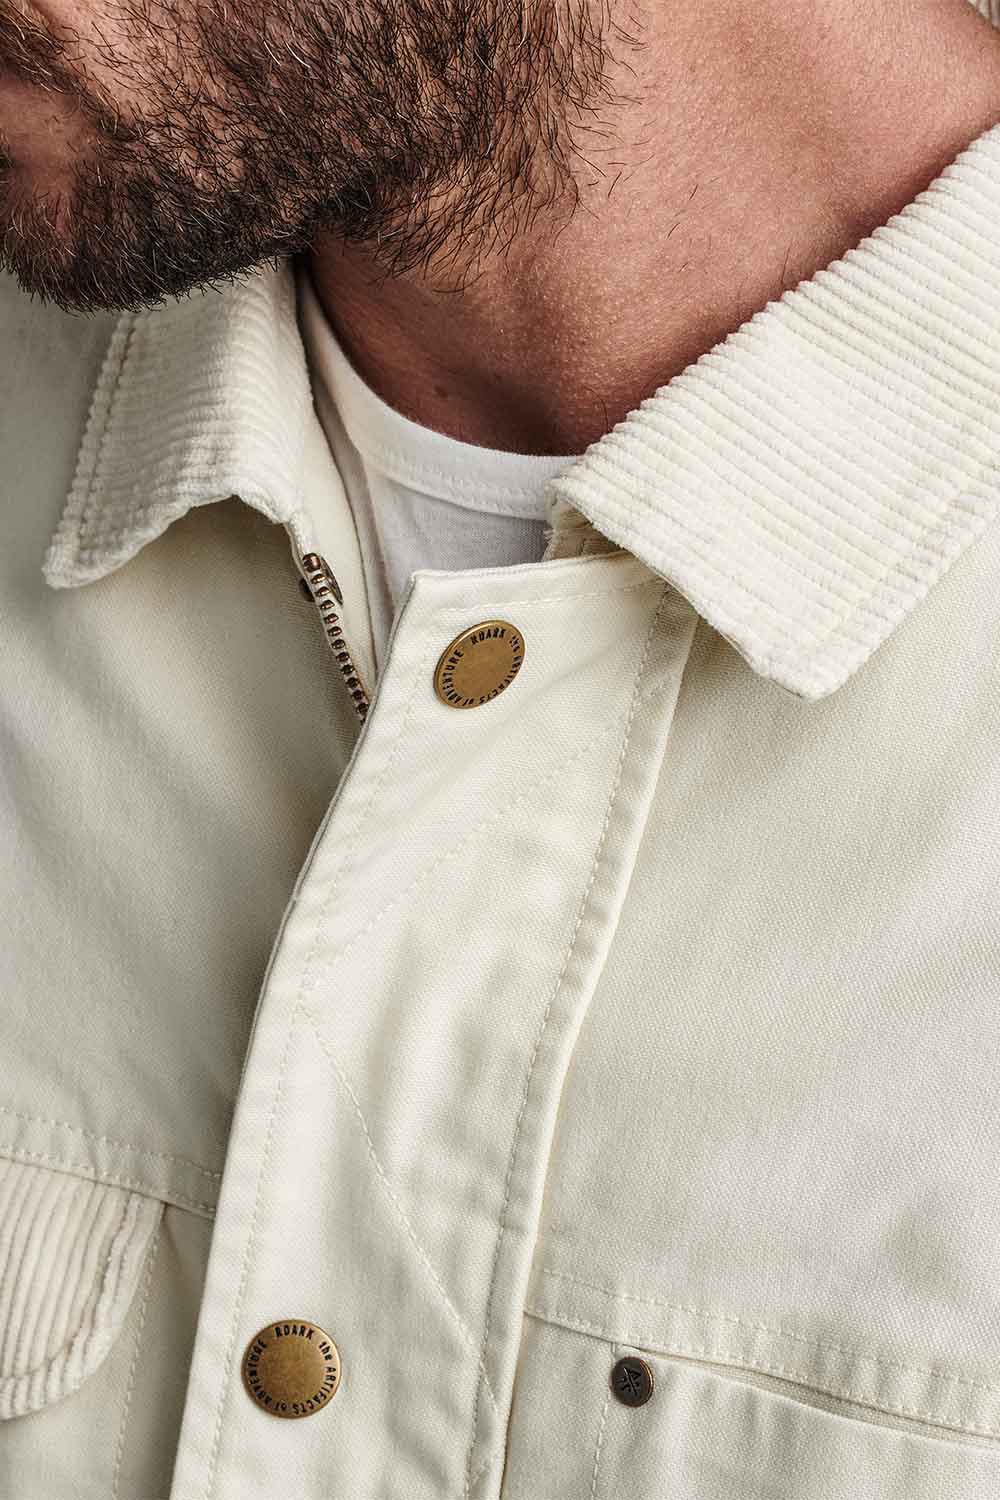 Roark - The Deckhand Jacket - Almond Paste - Collar